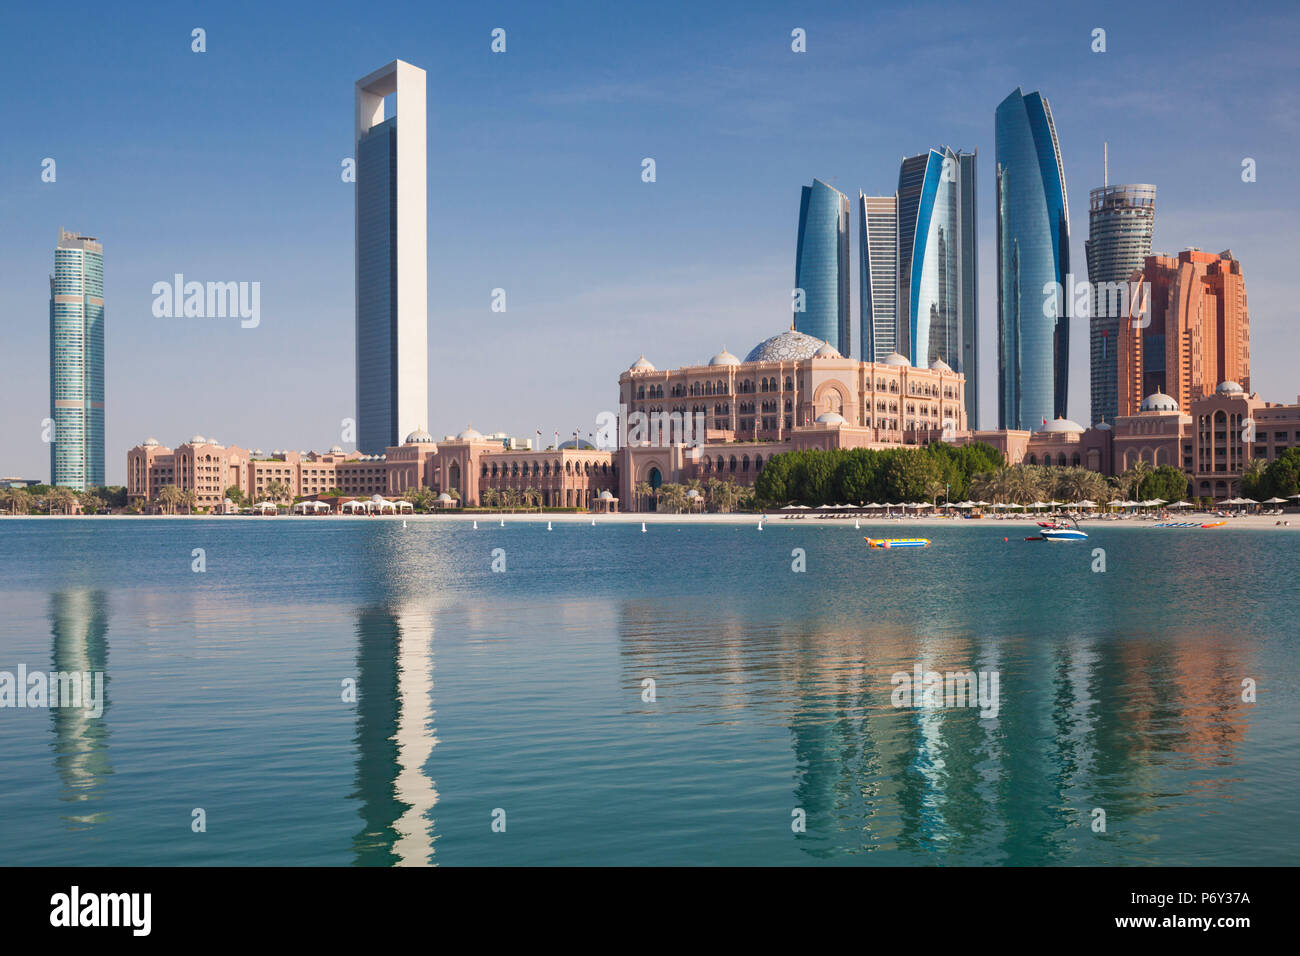 UAE, Abu Dhabi, skyline, Nations Towers, ADNOC Tower, Etihad Towers and Emirates Palace Hotel Stock Photo